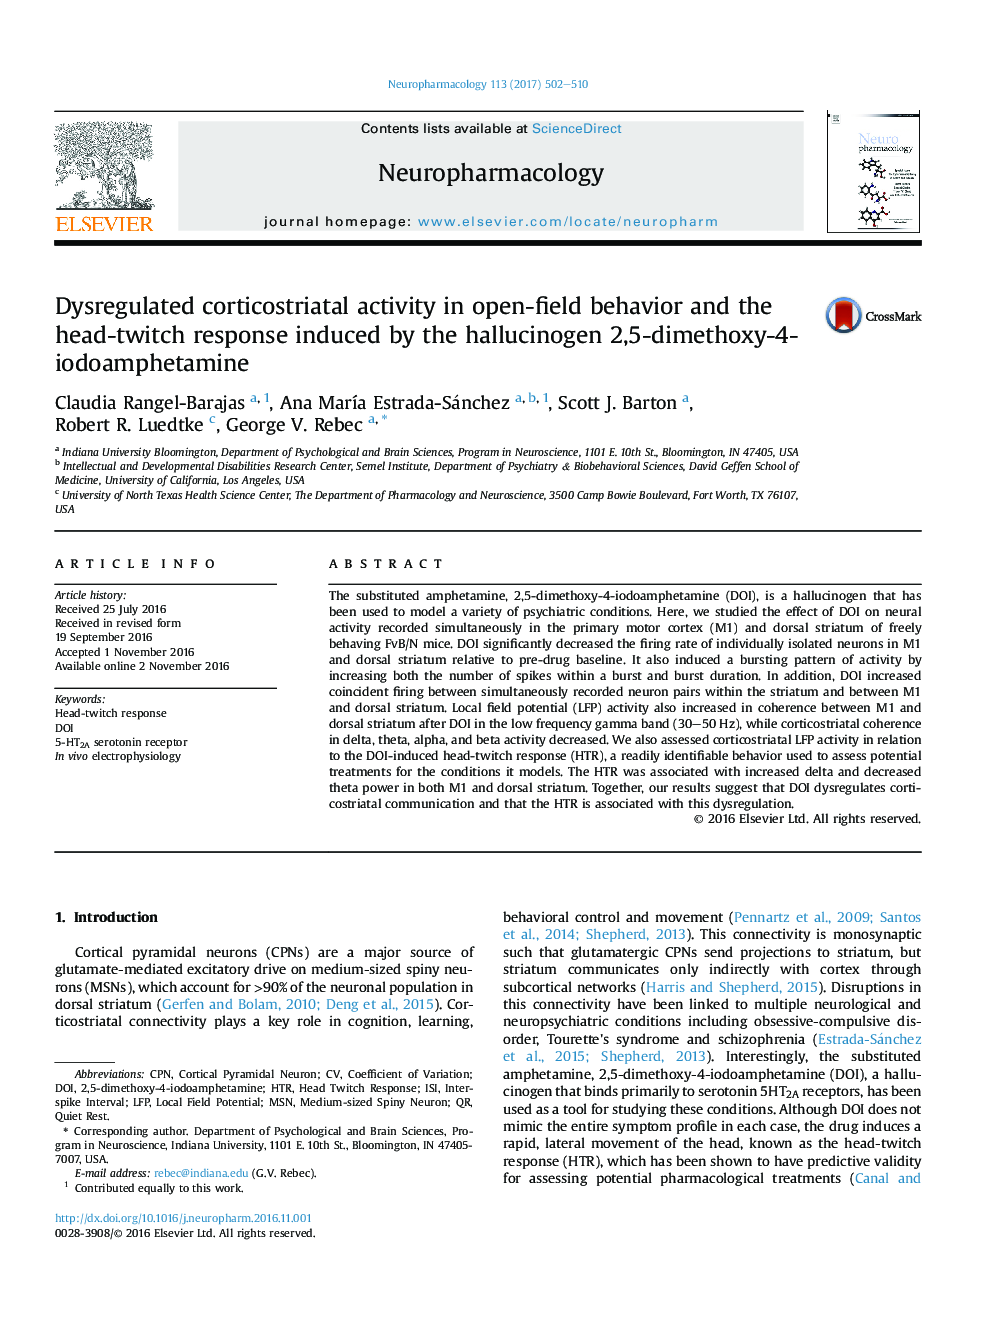 Dysregulated corticostriatal activity in open-field behavior and the head-twitch response induced by the hallucinogen 2,5-dimethoxy-4-iodoamphetamine